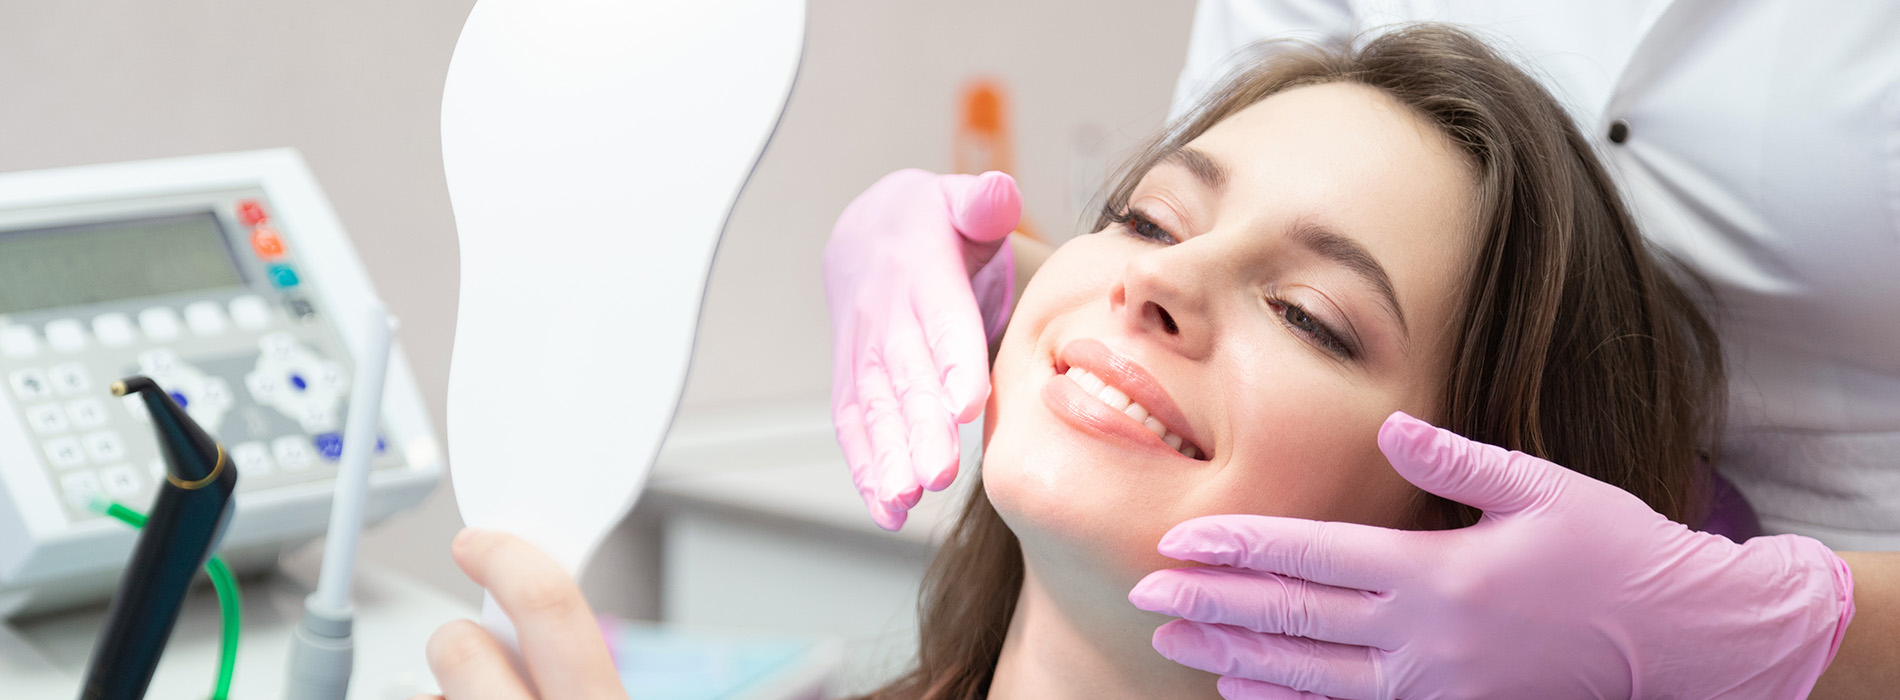 Bethesda Row Dental | Dental Emergencies, Sleep Apnea and Cosmetic Dentistry